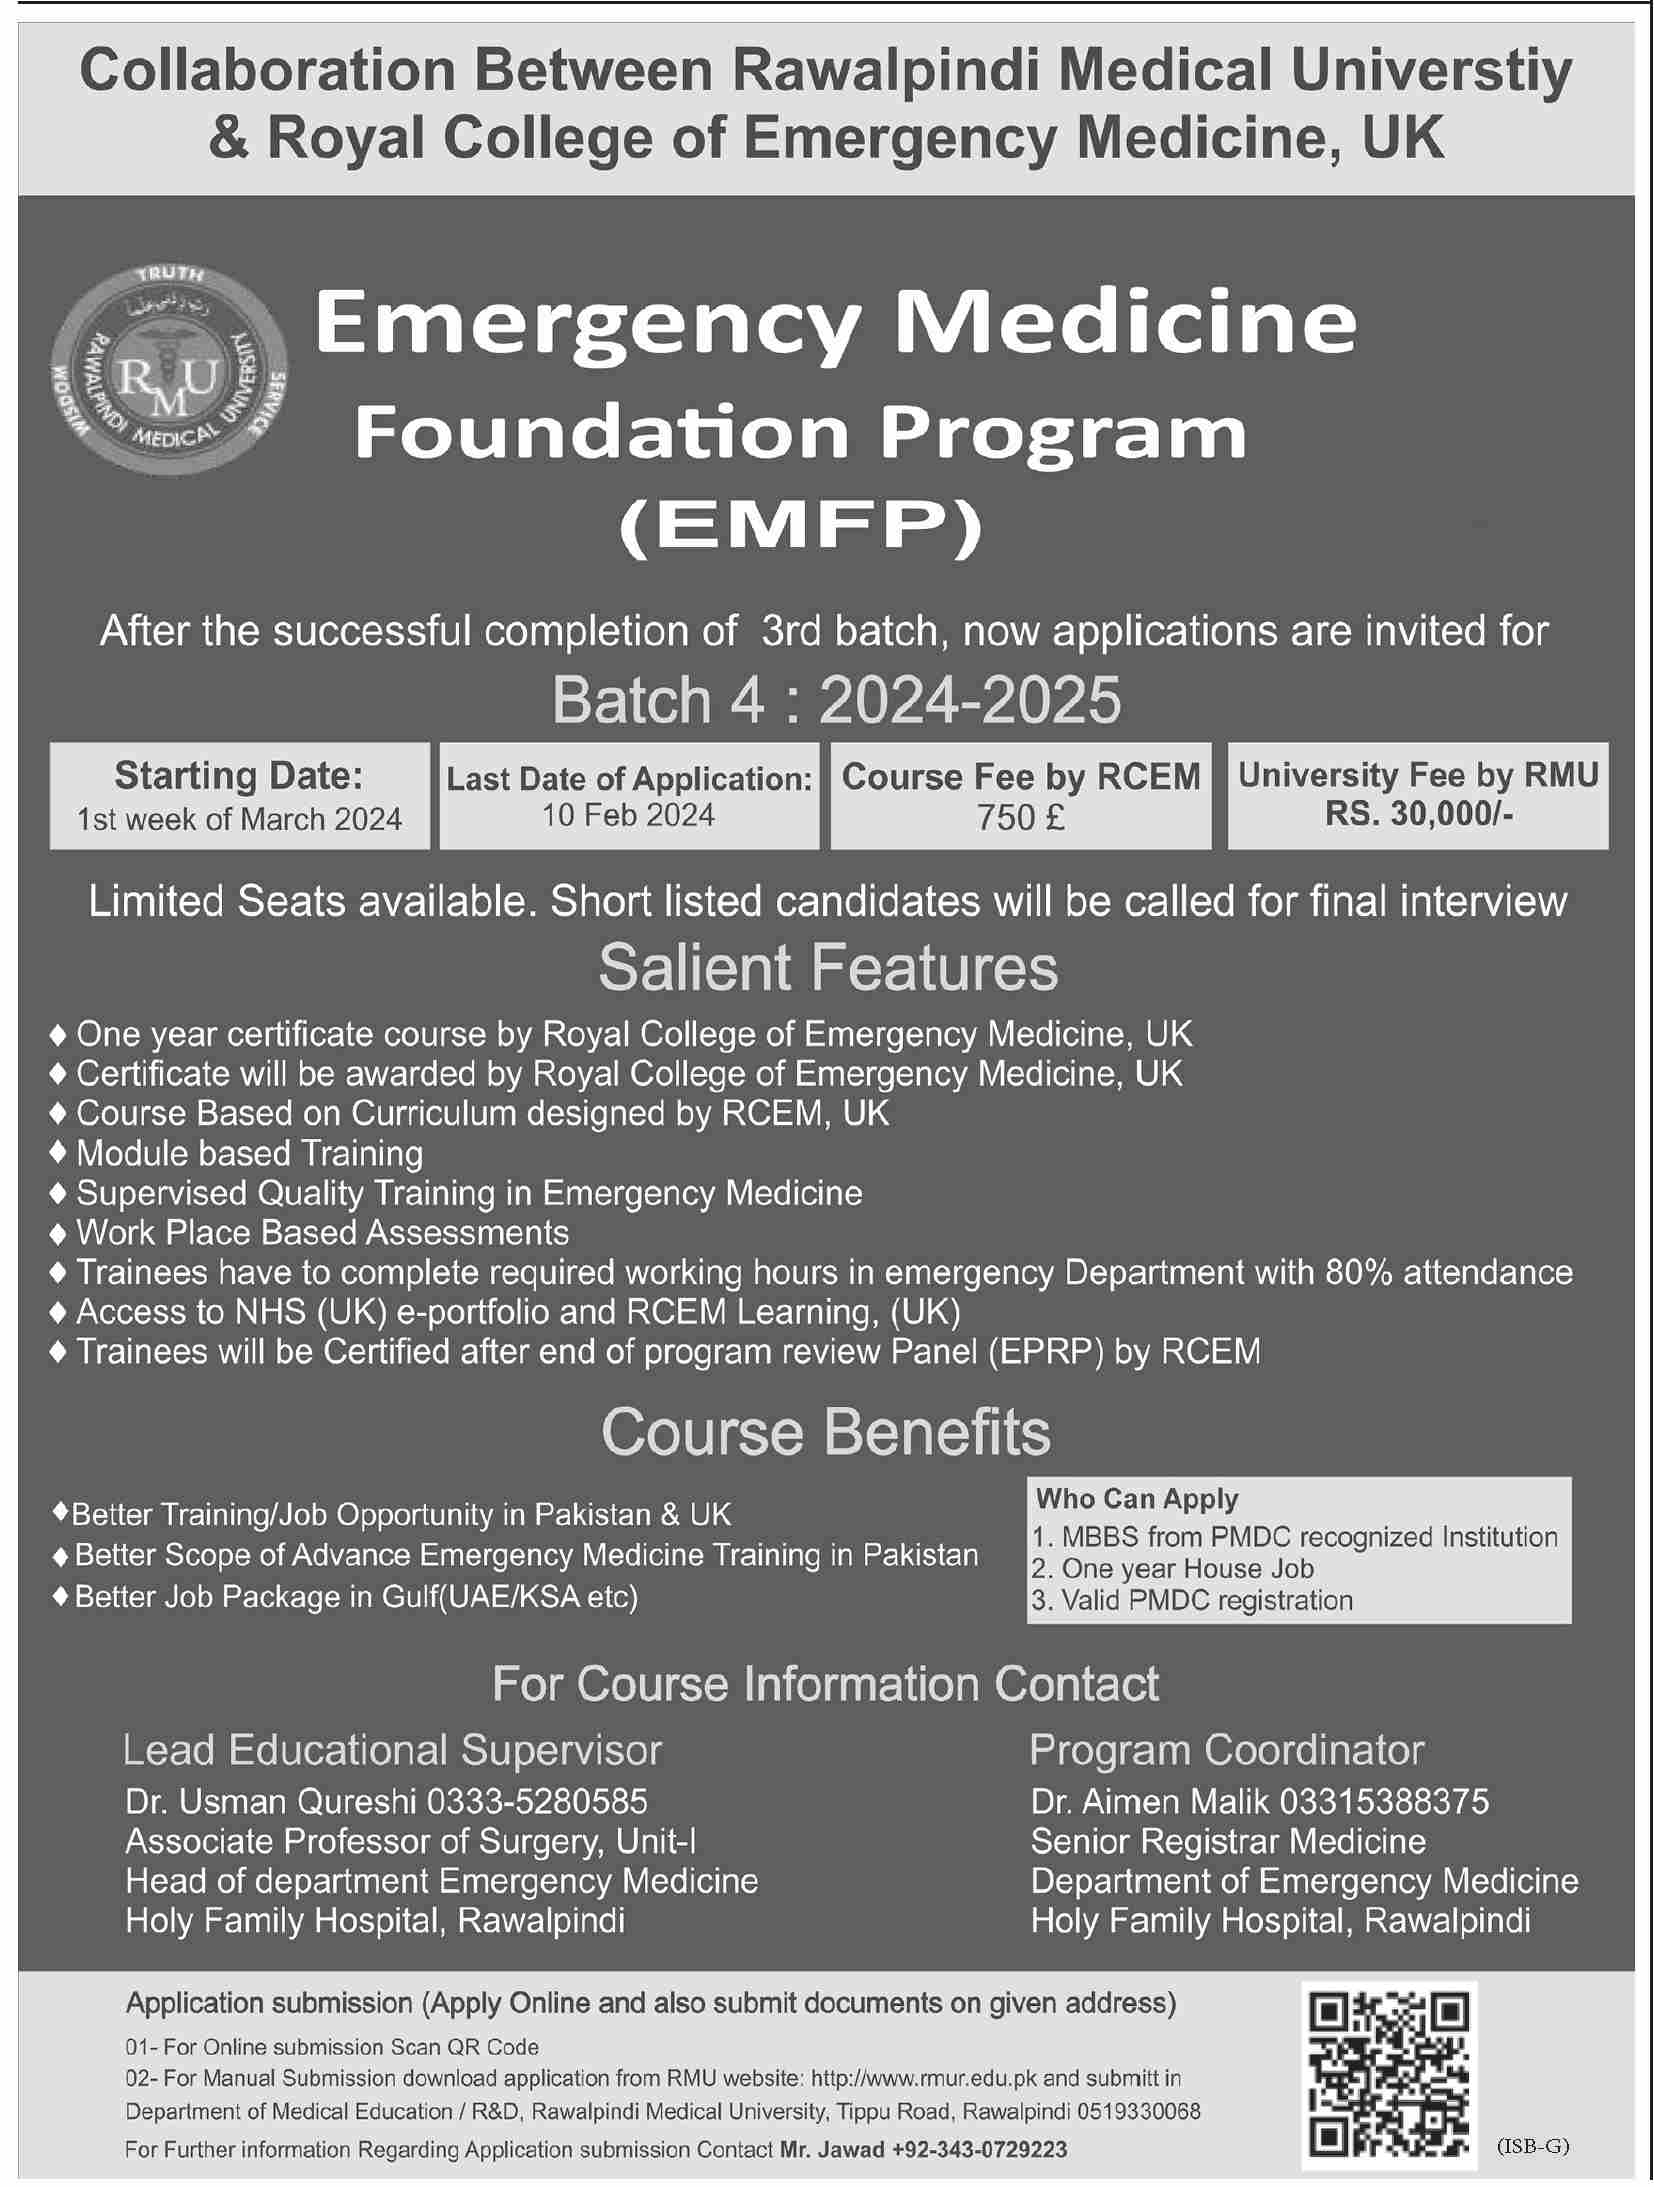 Emergency Medicine Foundation Program EMFP Rawalpindi Medical University & Royal College of Emergency Medicine UK